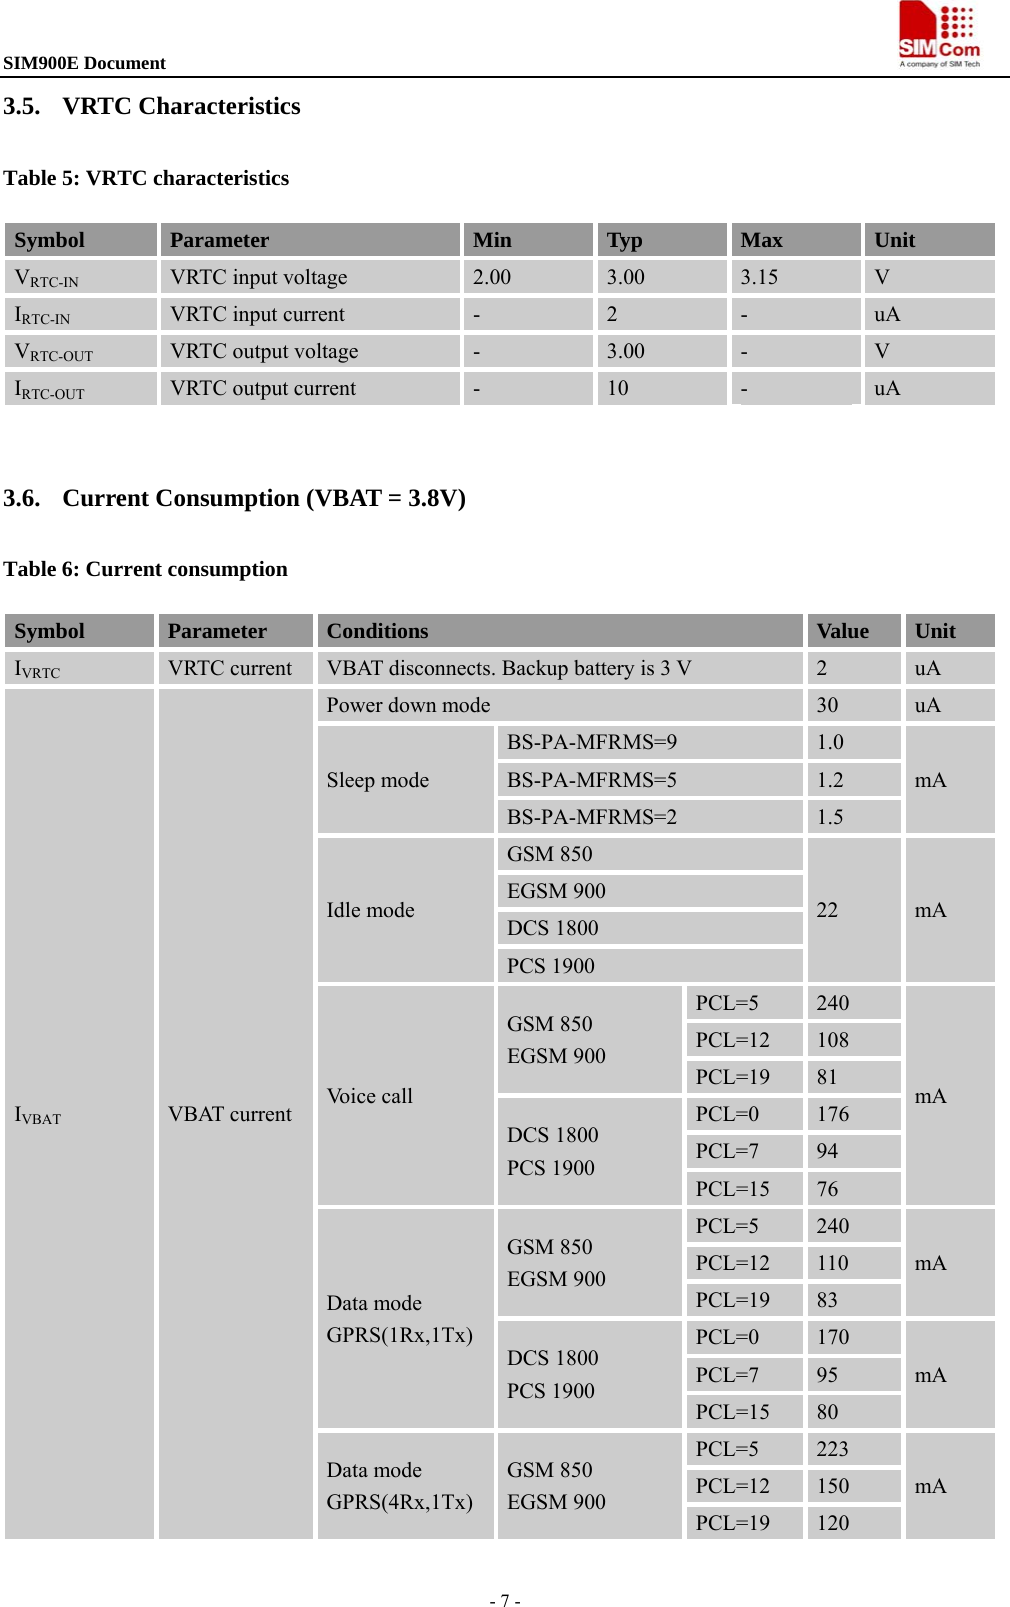 SIM900E Document                                                                                   - 7 - 3.5. VRTC Characteristics Table 5: VRTC characteristicsSymbol  Parameter  Min  Typ  Max  Unit VRTC-IN VRTC input voltage  2.00  3.00  3.15  V IRTC-IN VRTC input current  -  2  -  uA VRTC-OUT VRTC output voltage  -  3.00  -  V IRTC-OUT VRTC output current  -  10  -  uA  3.6. Current Consumption (VBAT = 3.8V) Table 6: Current consumption Symbol  Parameter  Conditions  Value  Unit IVRTC VRTC current  VBAT disconnects. Backup battery is 3 V  2  uA IVBAT VBAT current Power down mode  30  uA Sleep mode BS-PA-MFRMS=9  1.0 mA BS-PA-MFRMS=5  1.2 BS-PA-MFRMS=2  1.5 Idle mode GSM 850 22  mA EGSM 900 DCS 1800 PCS 1900 Voice call GSM 850 EGSM 900 PCL=5  240 mA PCL=12  108 PCL=19  81 DCS 1800 PCS 1900 PCL=0  176 PCL=7  94 PCL=15  76 Data mode GPRS(1Rx,1Tx) GSM 850 EGSM 900 PCL=5  240 mA PCL=12  110 PCL=19  83 DCS 1800 PCS 1900 PCL=0  170 mA PCL=7  95 PCL=15  80 Data mode GPRS(4Rx,1Tx) GSM 850 EGSM 900 PCL=5  223 mA PCL=12  150 PCL=19  120 